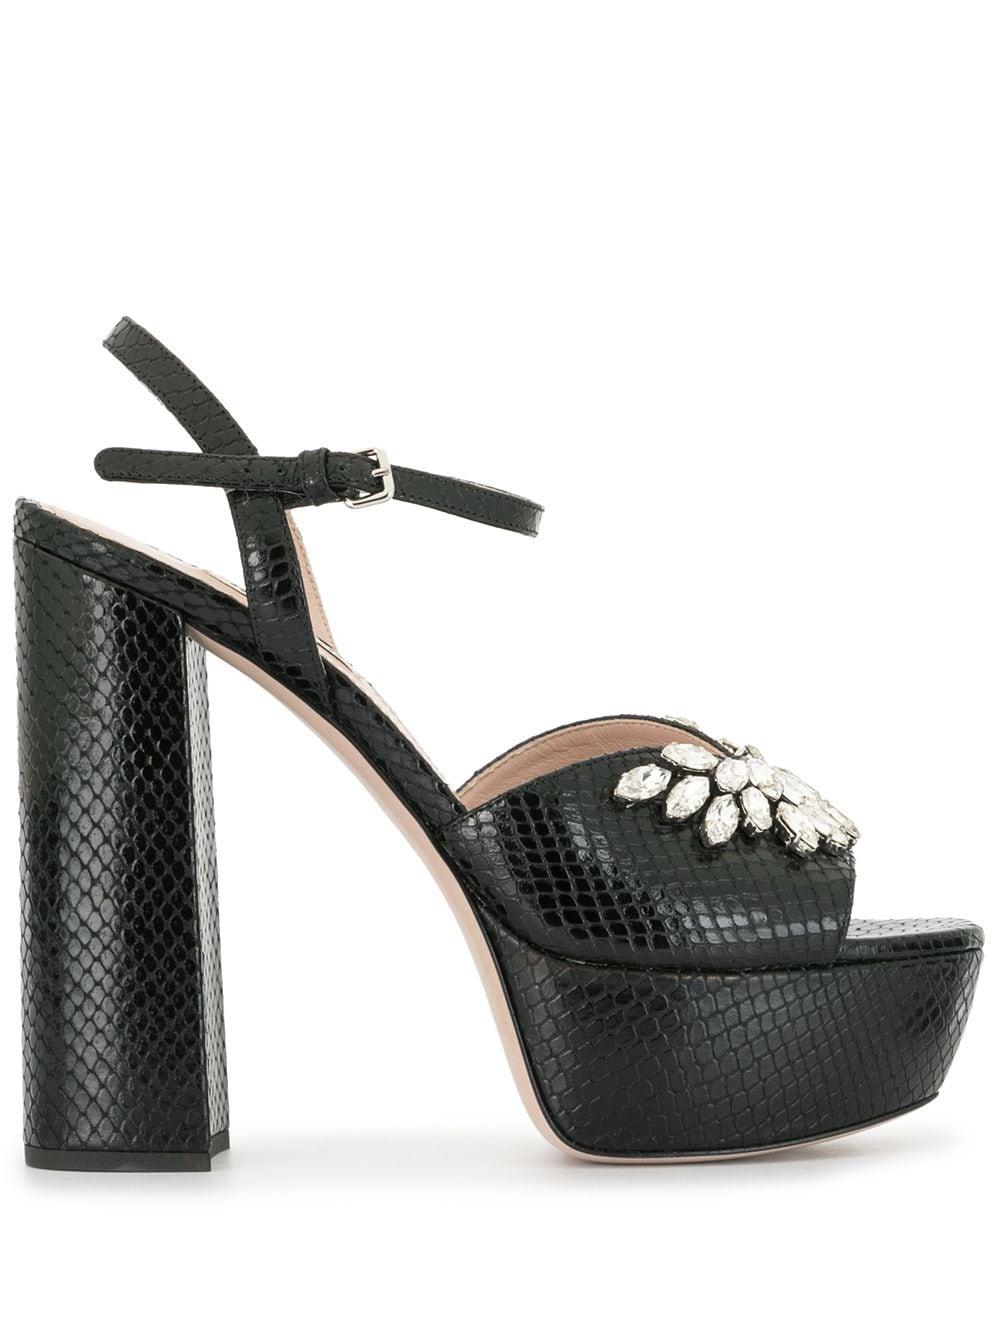 Miu Miu Leather Crystal-embellished Platform Sandals in Black - Lyst